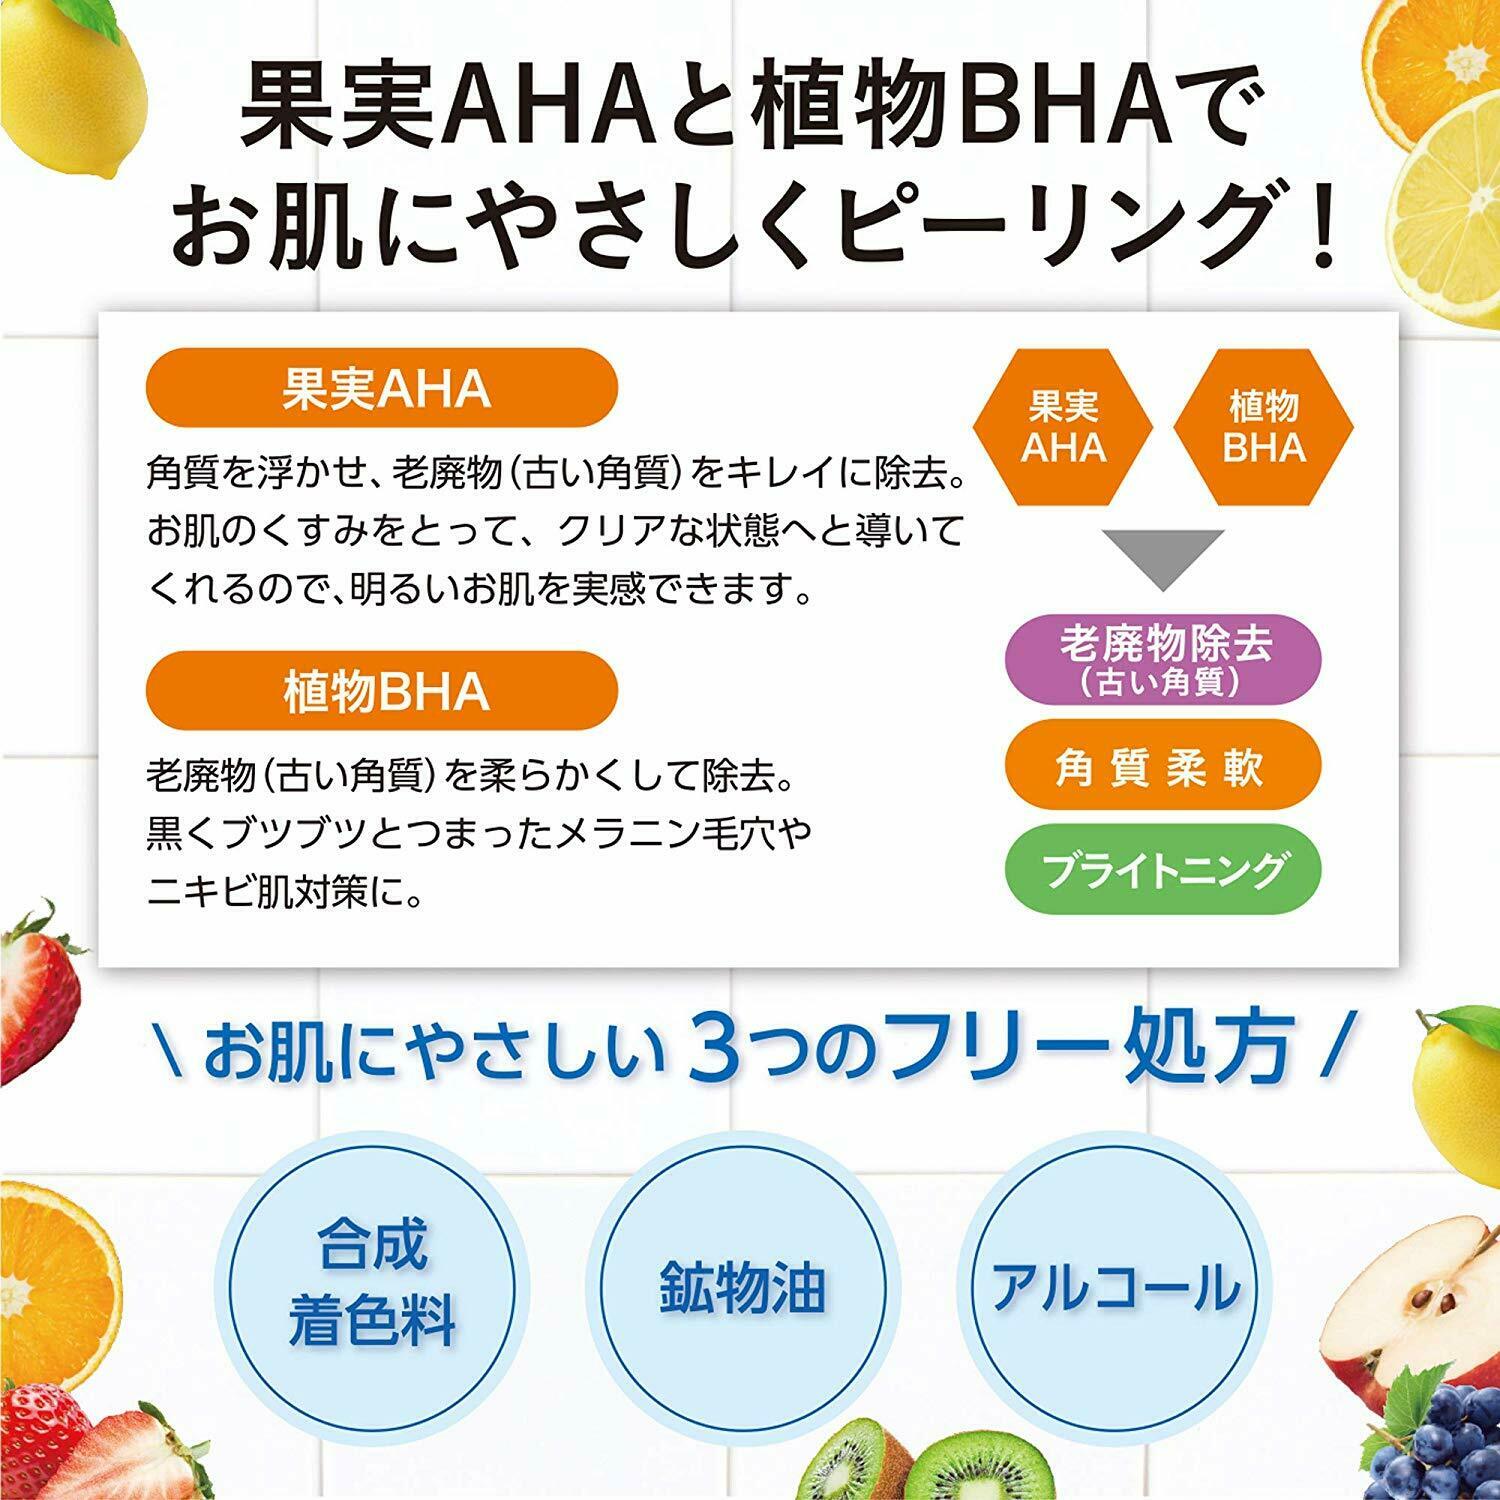 MEISHOKU Detclear Bright & Peel Peeling Jelly 180ML Non-fragrance Japan